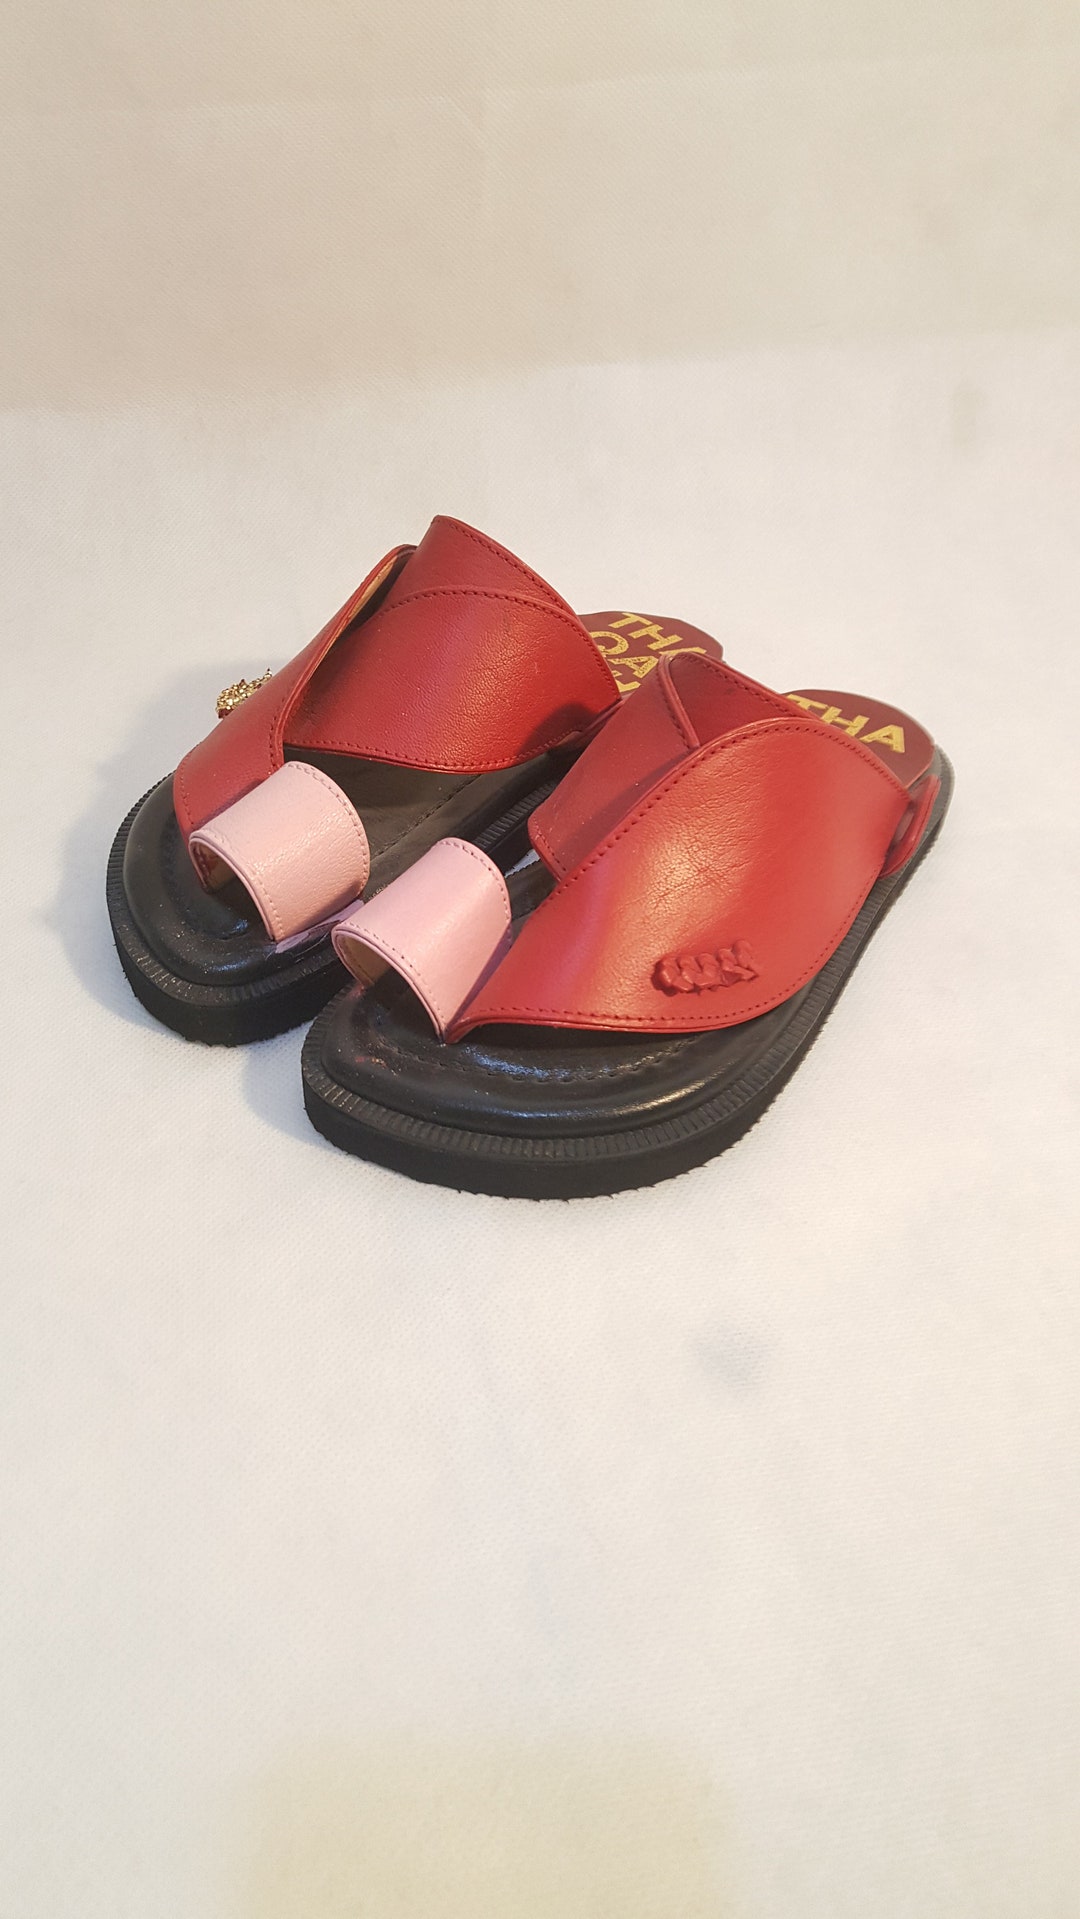 Saudi Sandals Arabic Sandals Traditional Sandals - Etsy